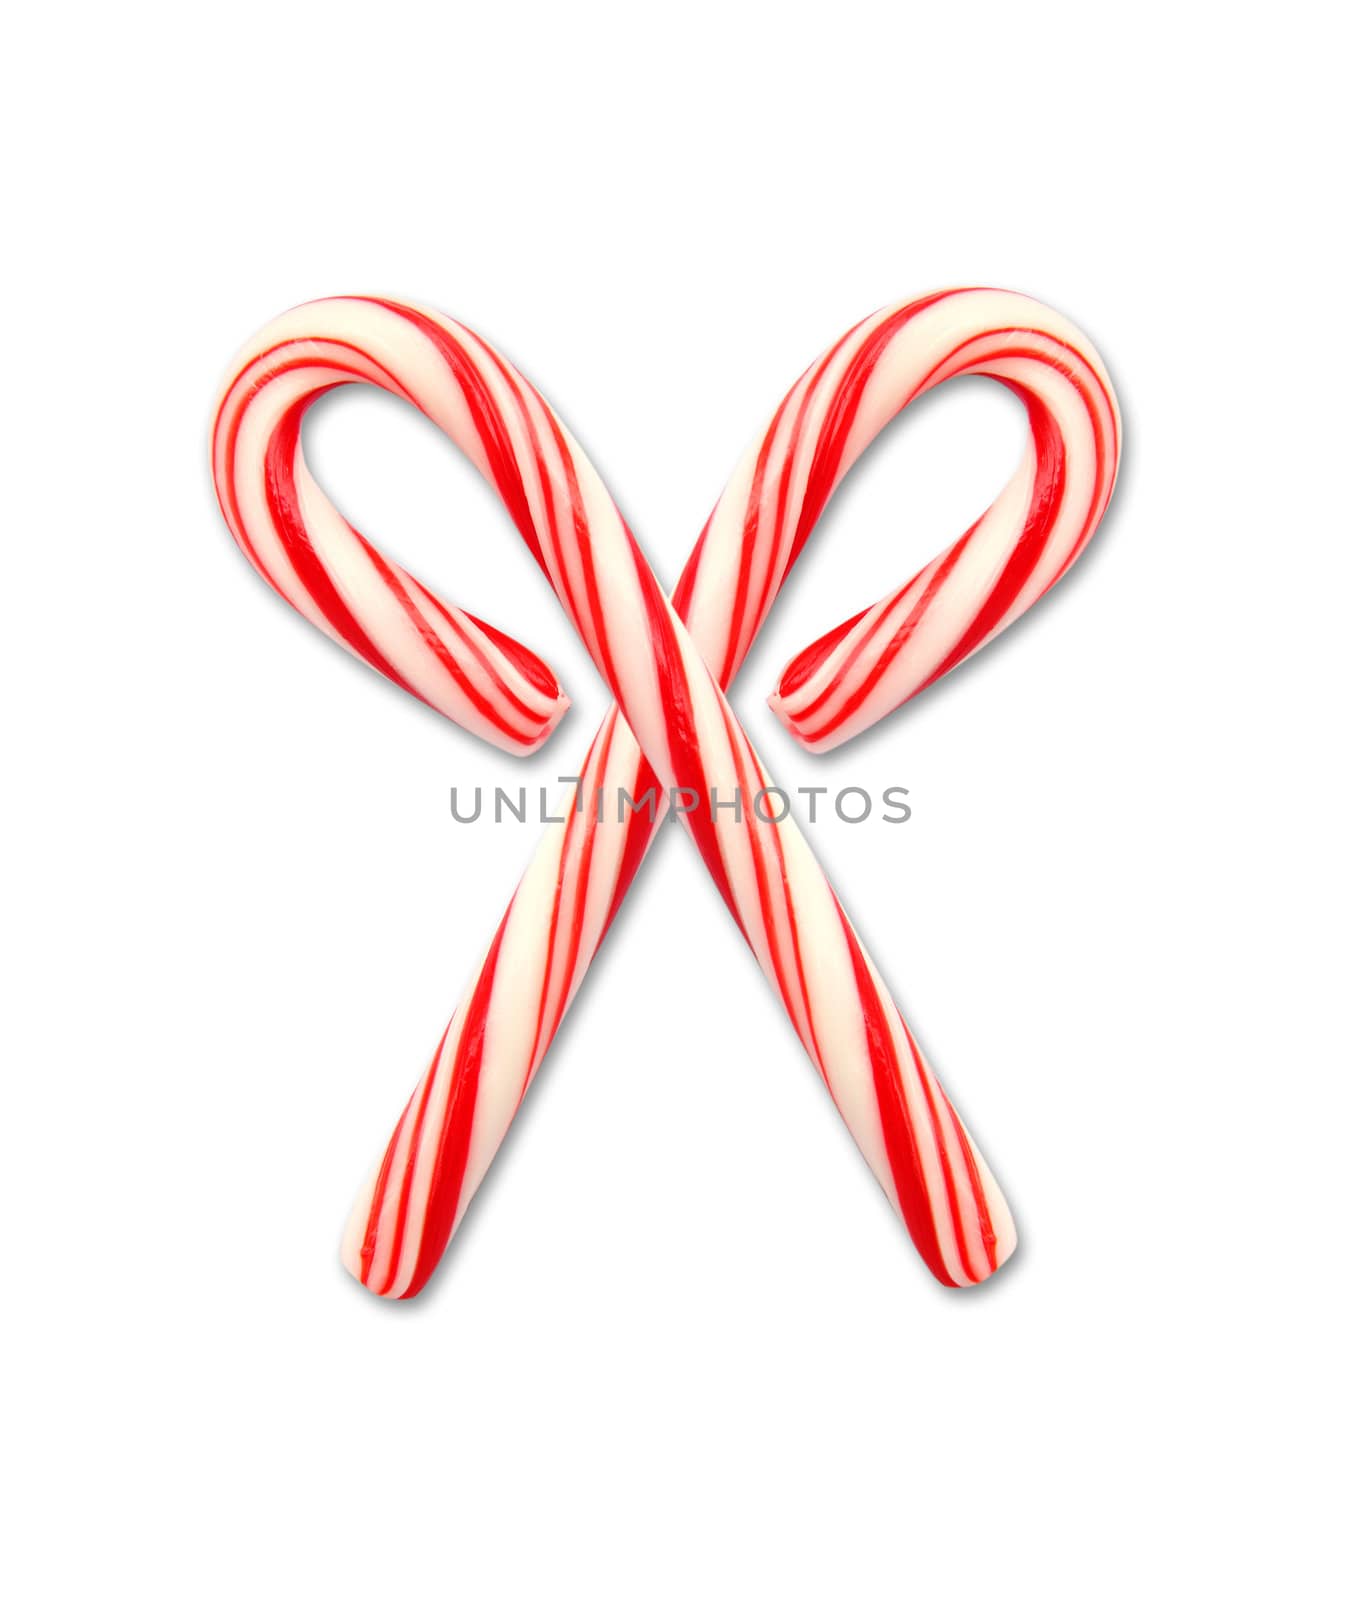 Christmas candy cane isolated on white background